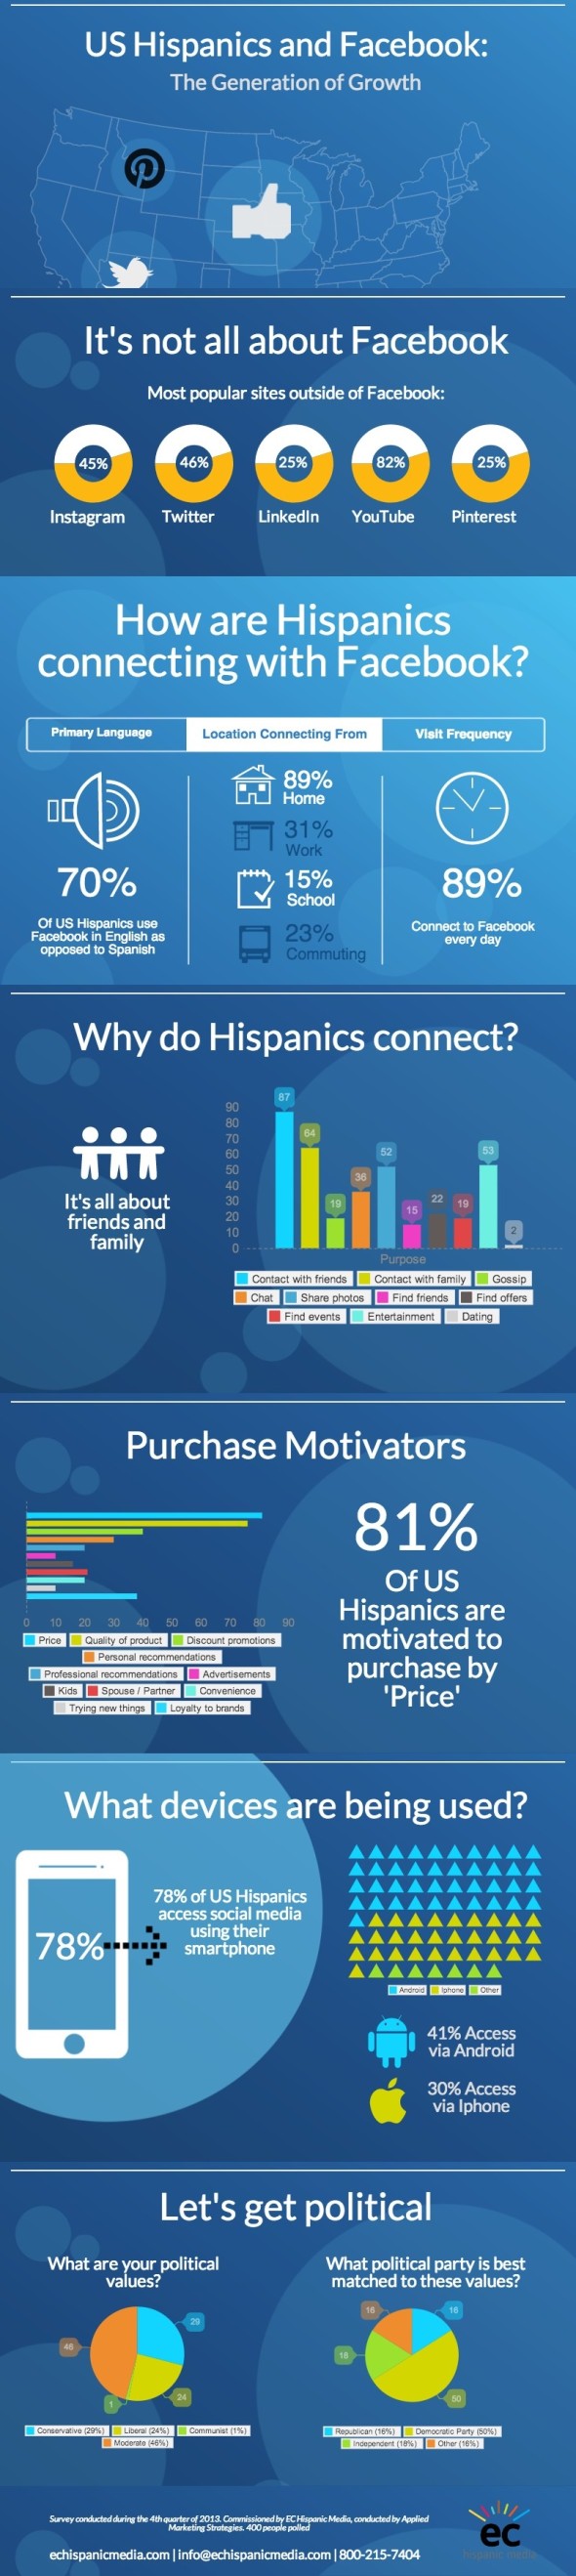 US_Hispanic_Facebook_Infographic